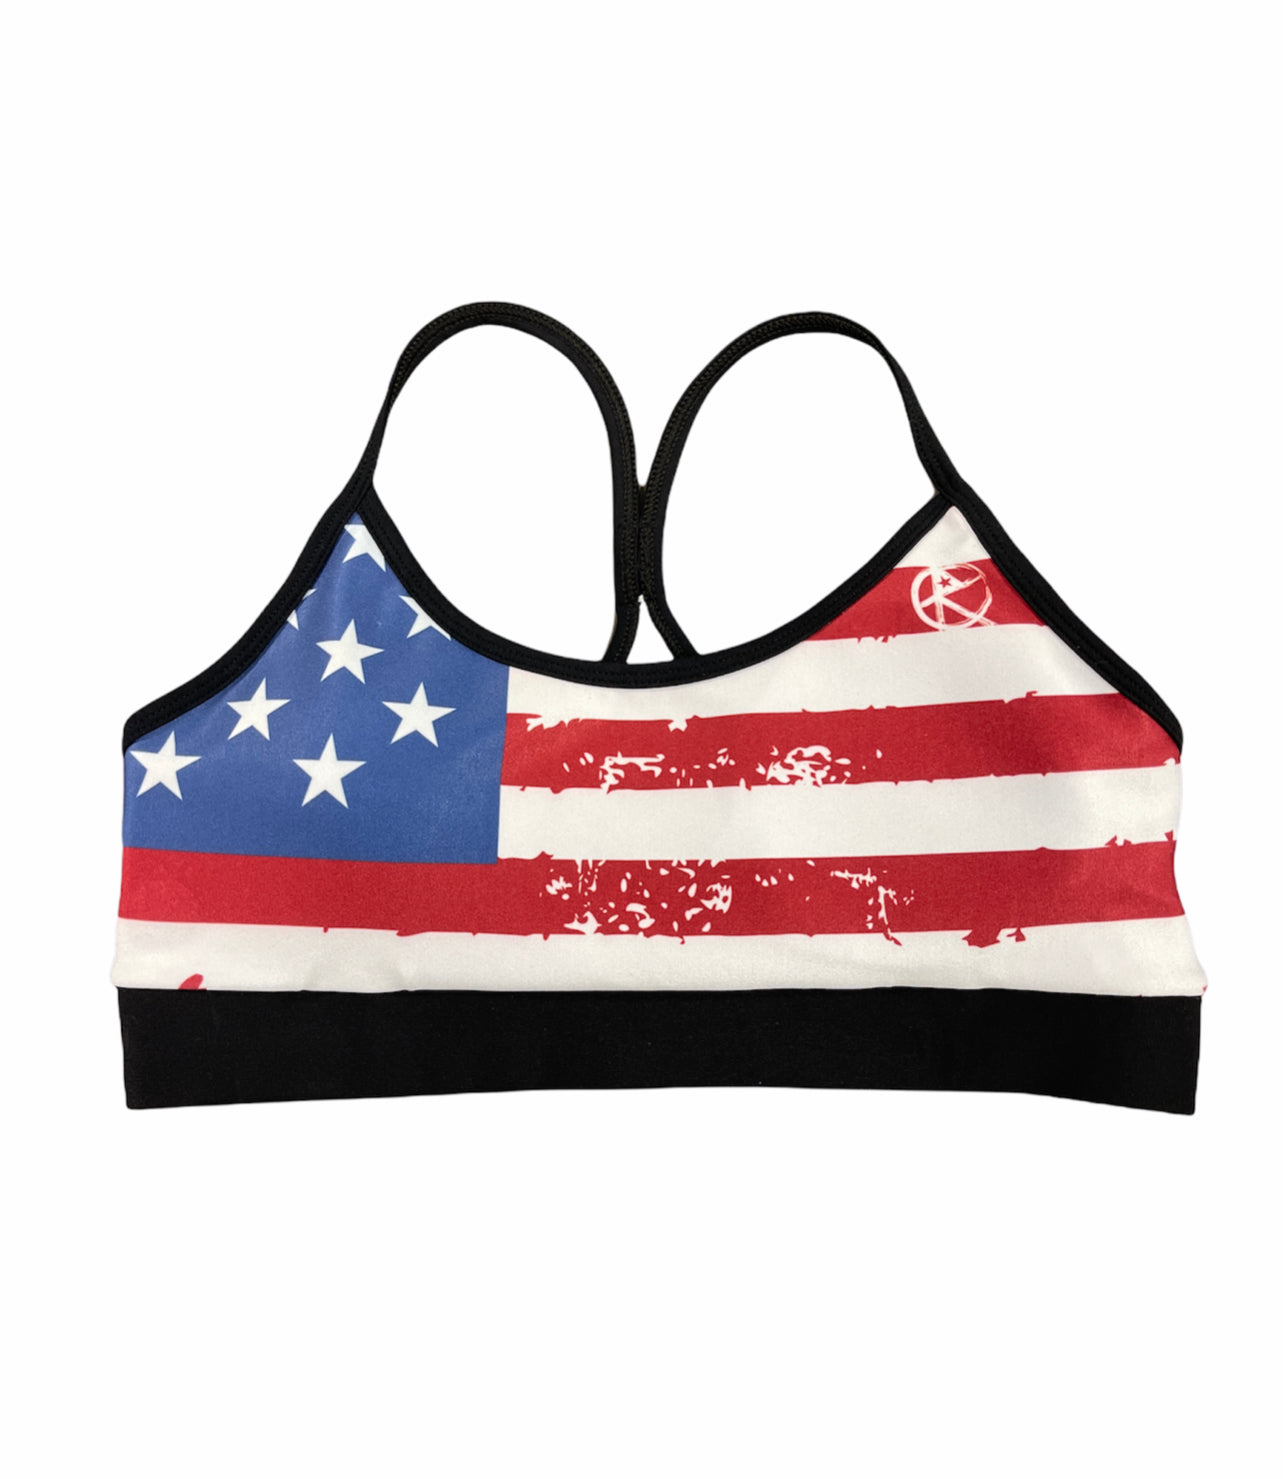 Patriotic American flag sports bra for team USA